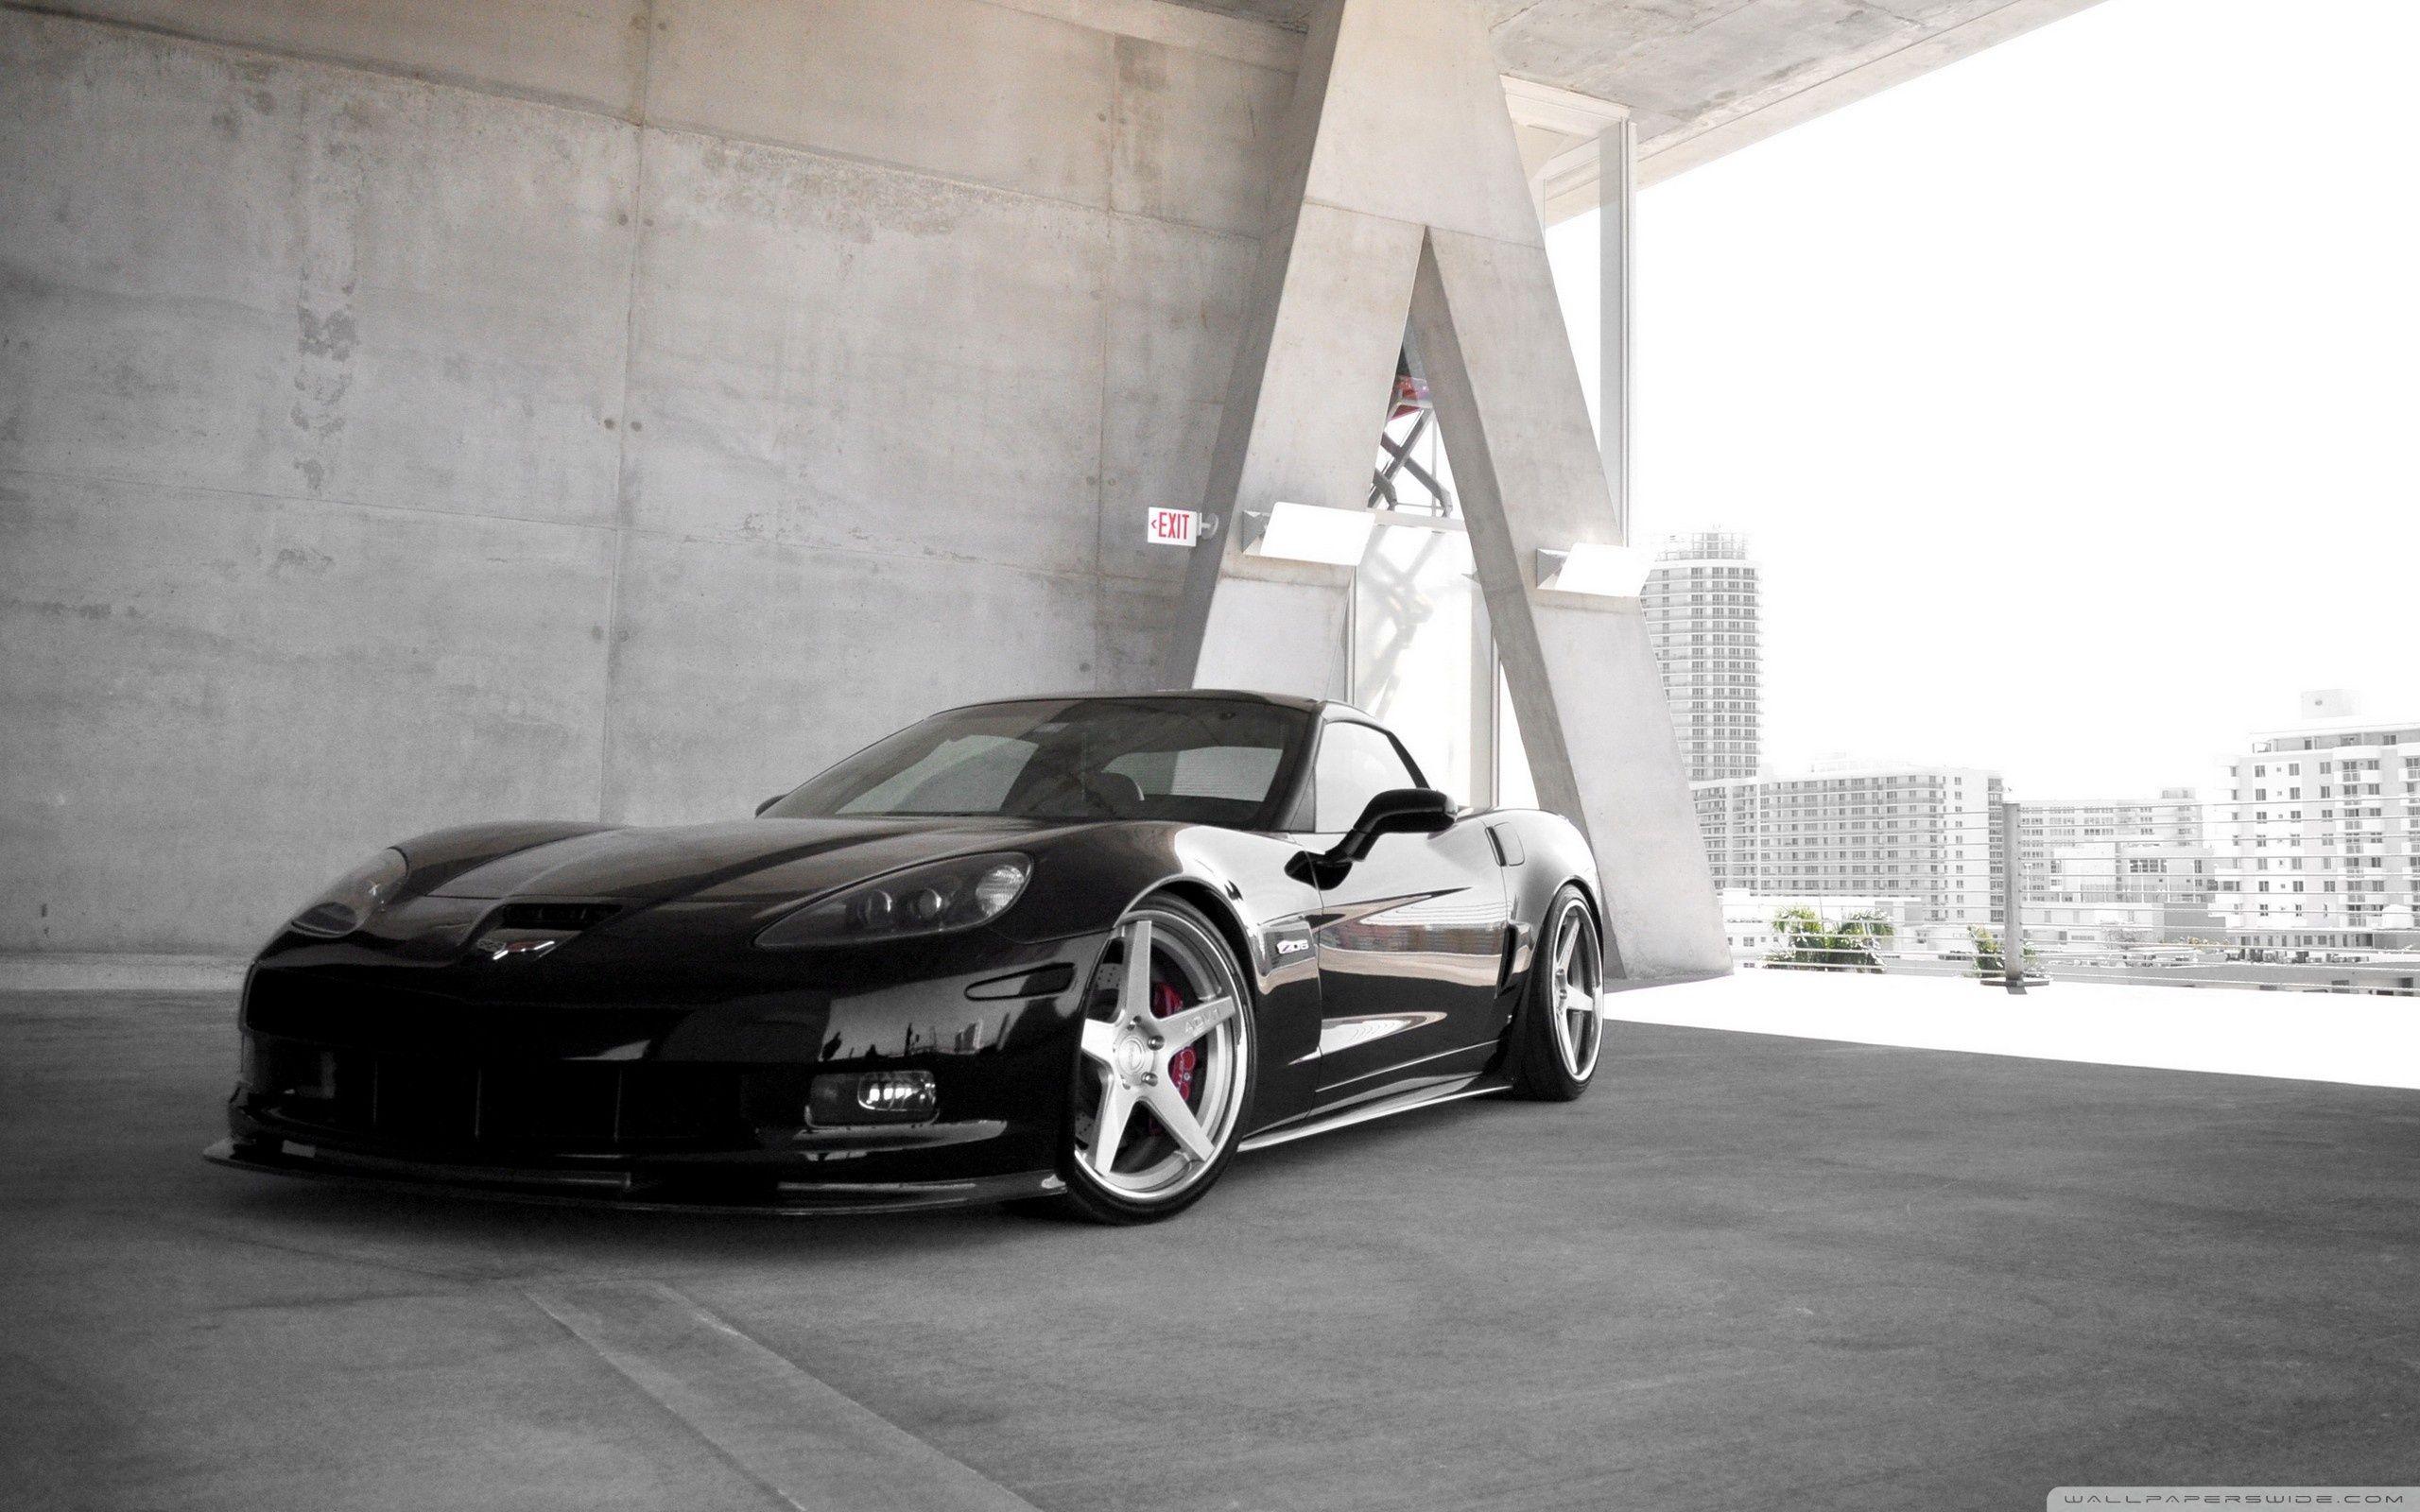 Black Corvette Wallpapers Top Free Black Corvette Backgrounds Wallpaperaccess